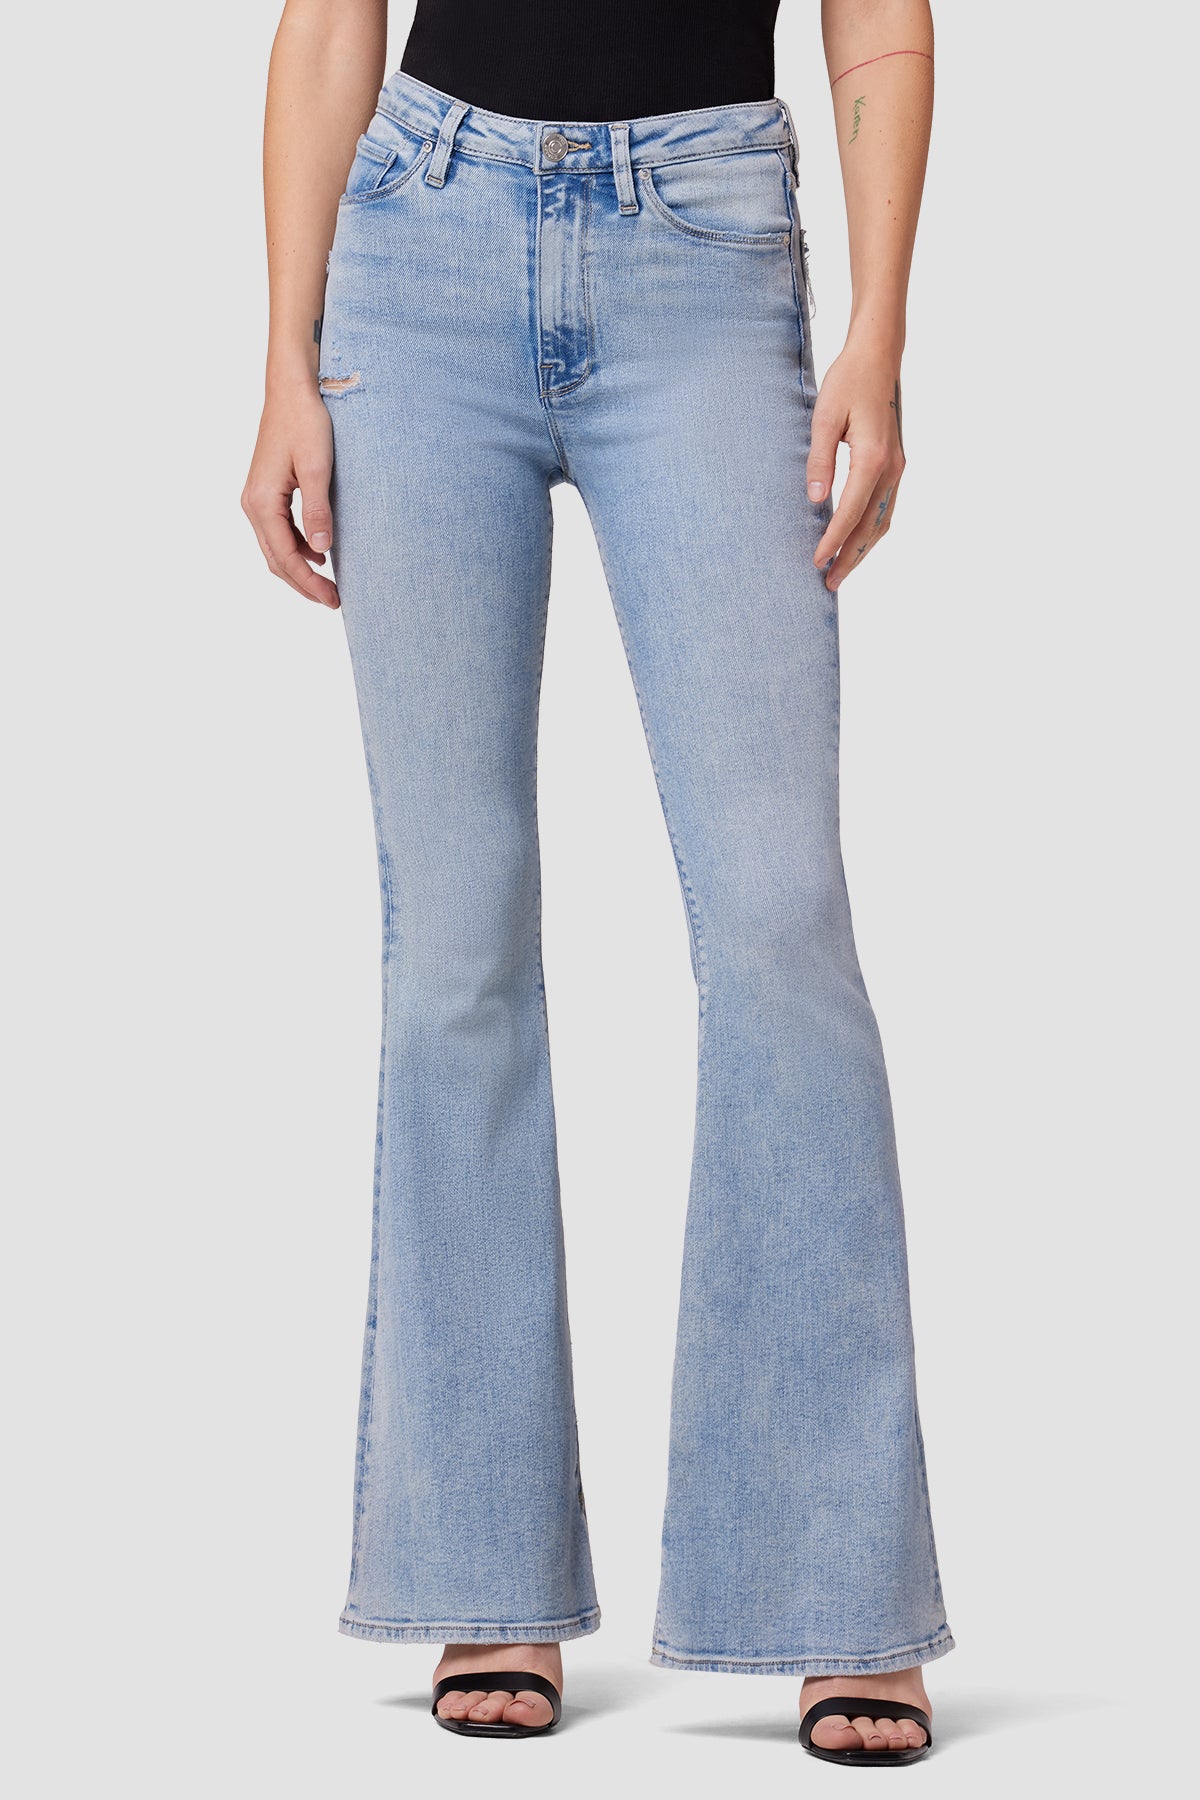 Women's Ultra High Rise Stretch Flare Jean, Women's Sale